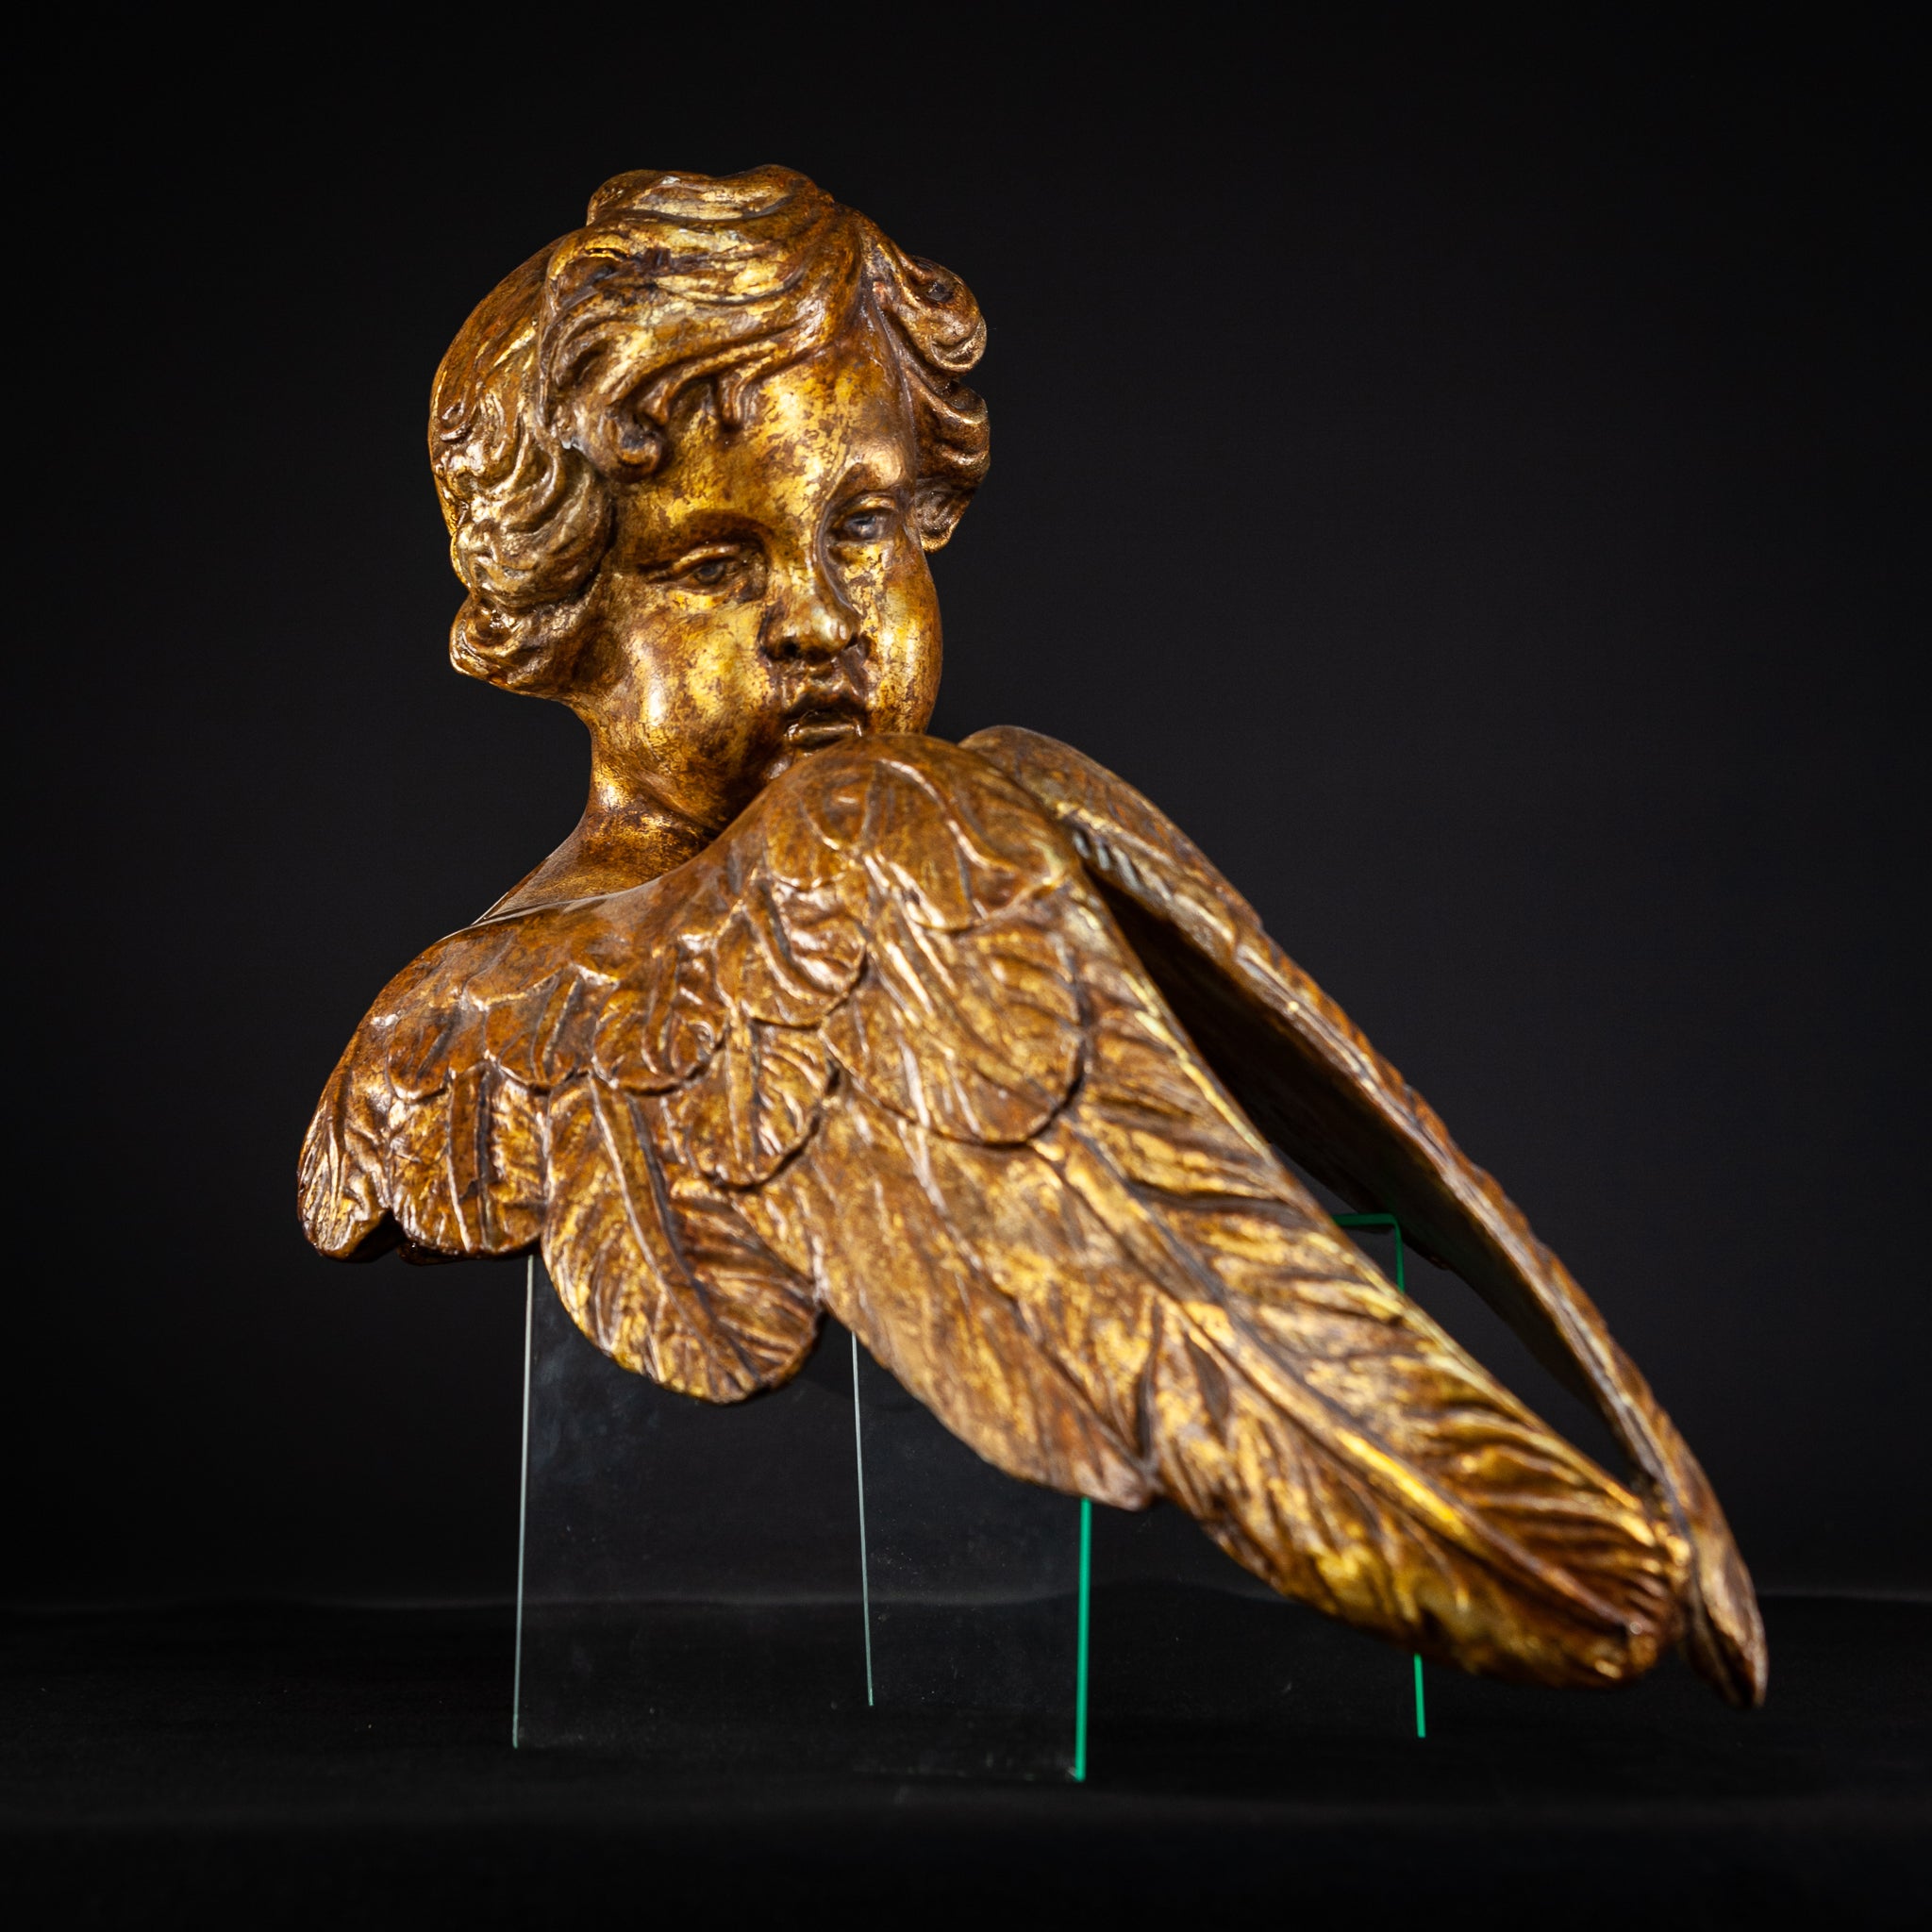 Angel Sculpture Pair | 18th Century 22.4"